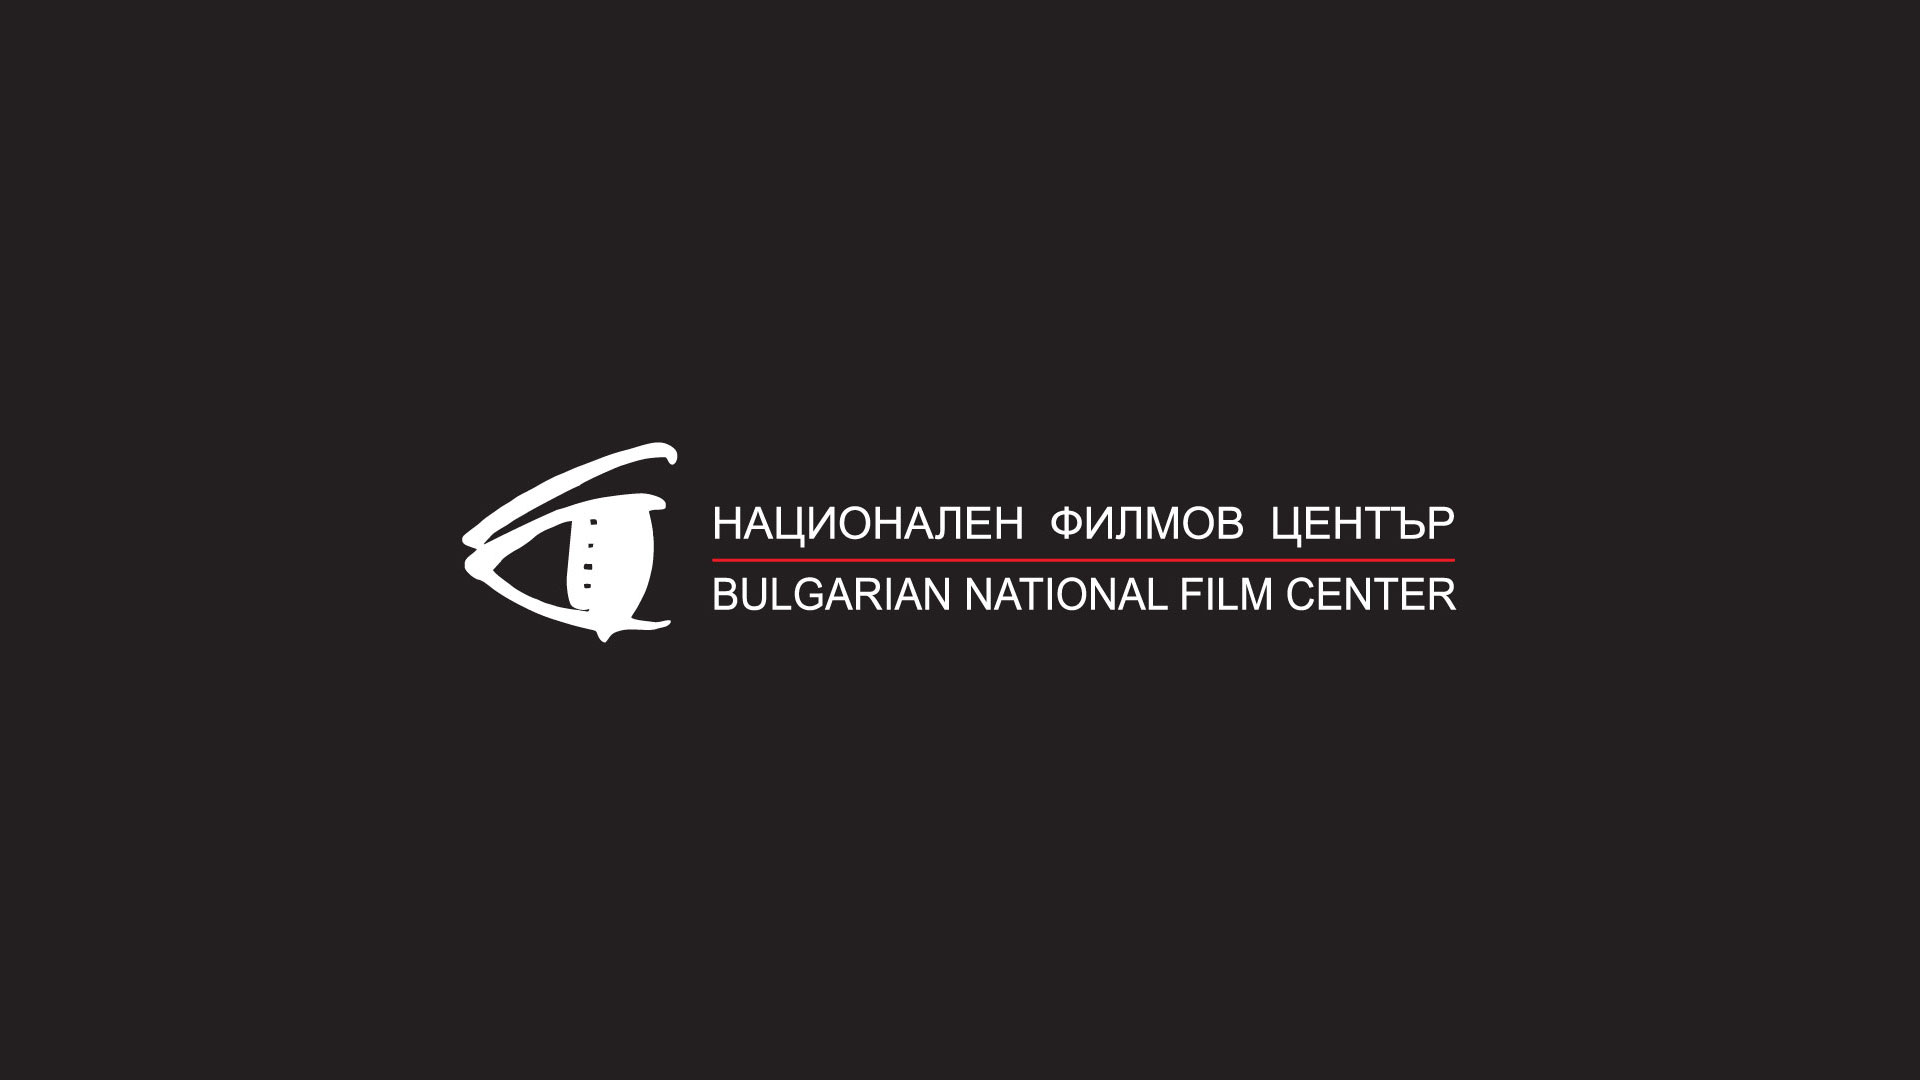 BulgarianNationalFilmCenter